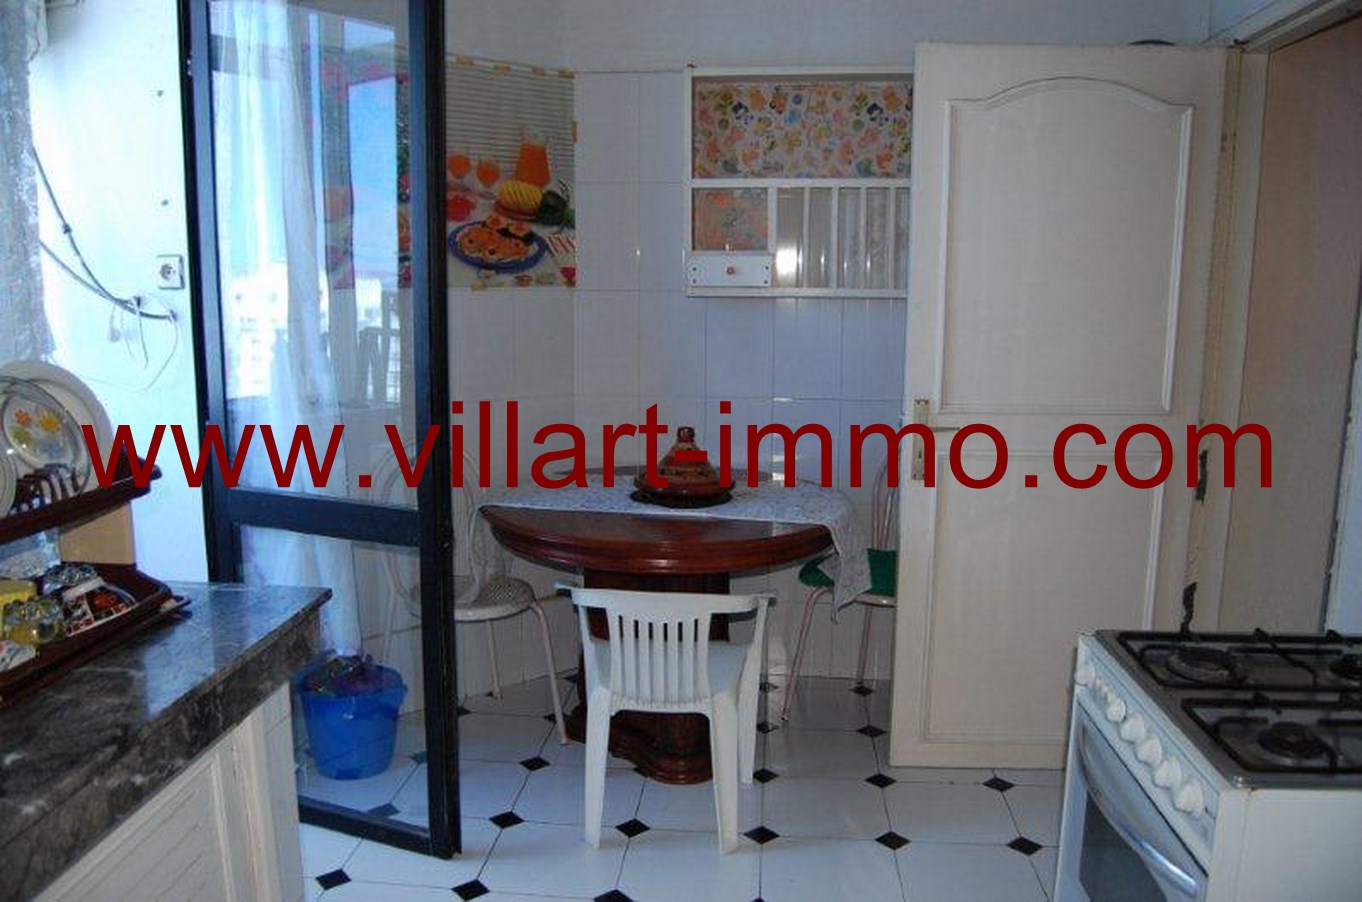 4-Location-Appartement-Meublé-Tanger-Cuisine-L679-Villart immo